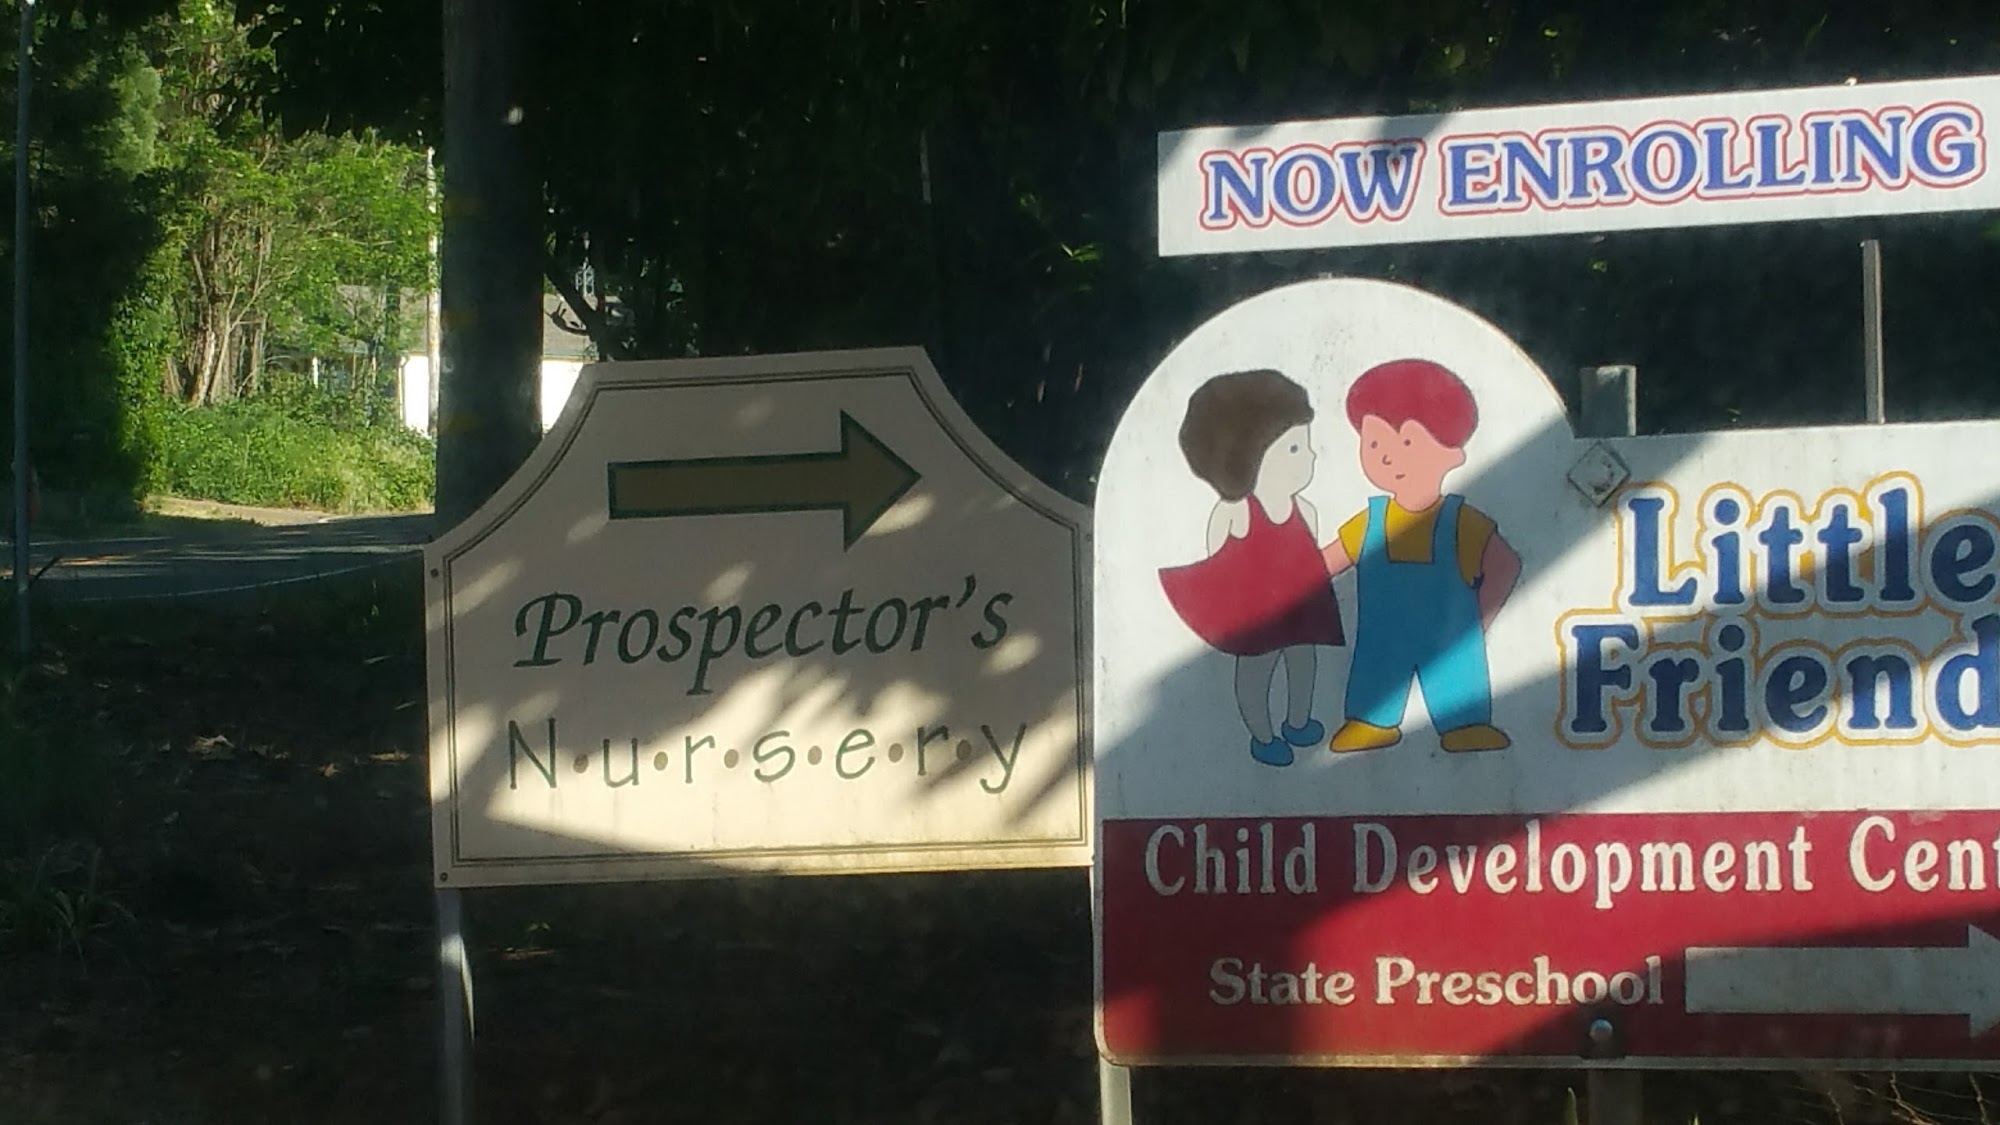 Prospector's Nursery LLC